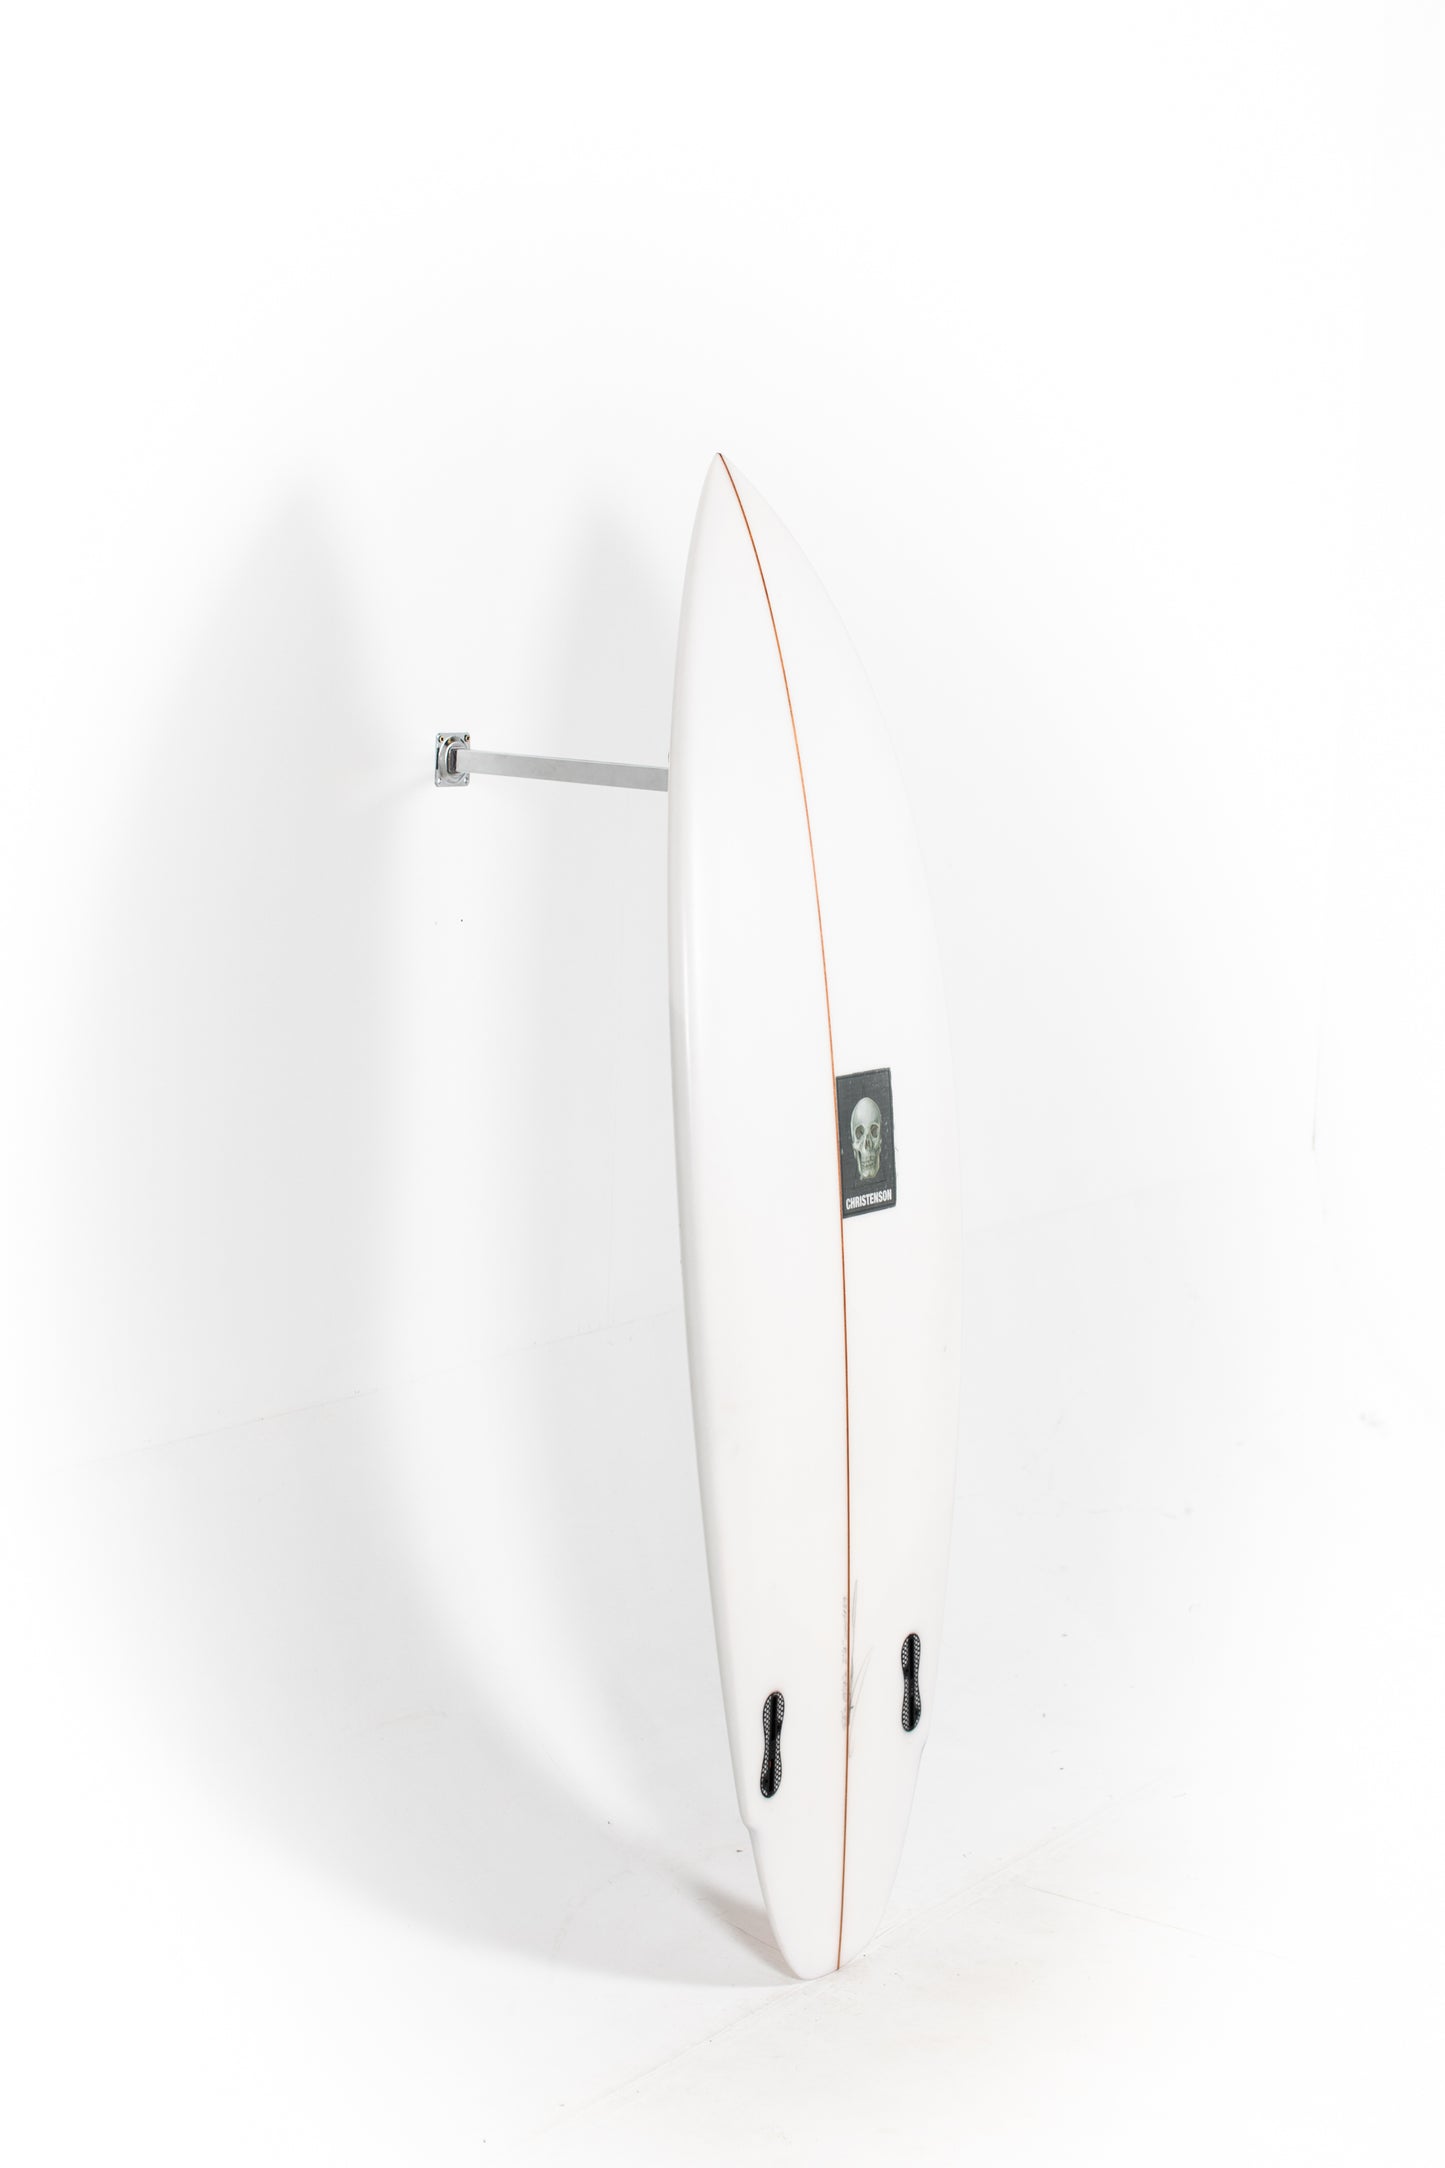 
                  
                    Pukas Surf Shop - 2ND HAND Pukas Surfboards - LANE SPLITTER by Chris Christenson - 5’3 x 19 1/4 x 2 1/4
                  
                